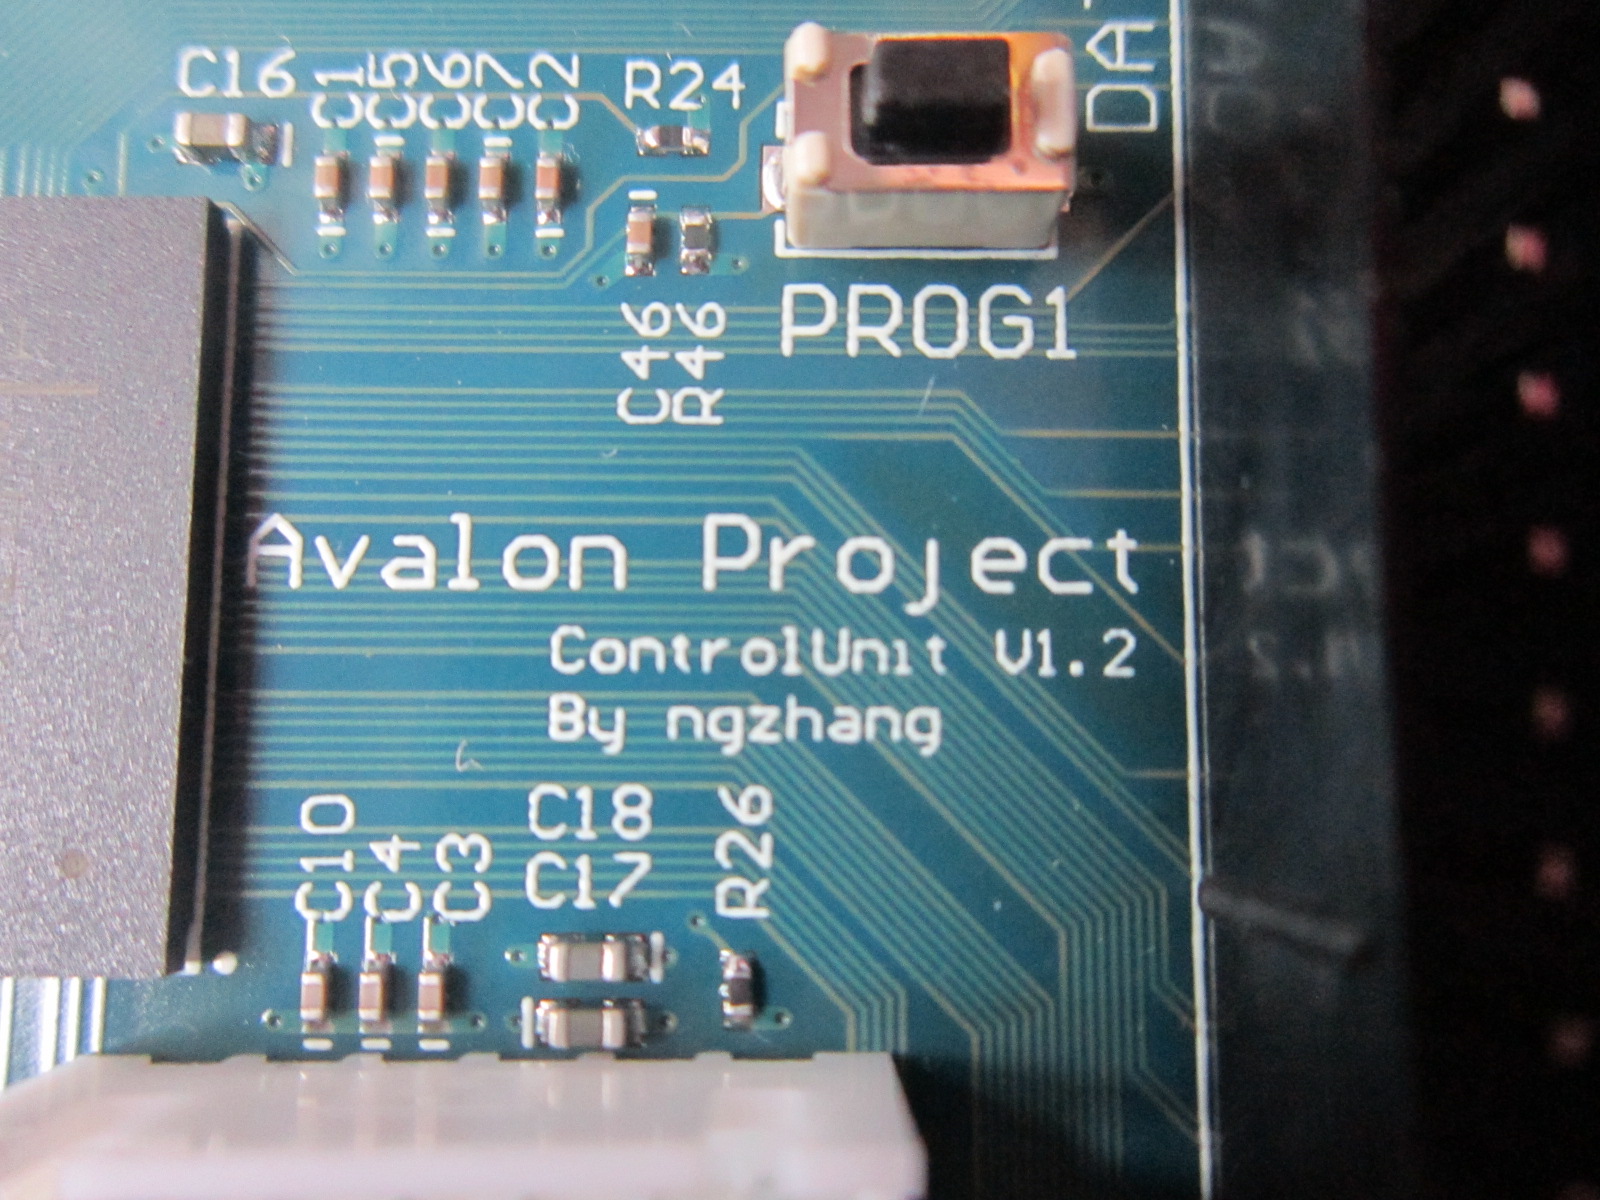 Avalon-controlunit-v1.2-by-ngzhang.JPG